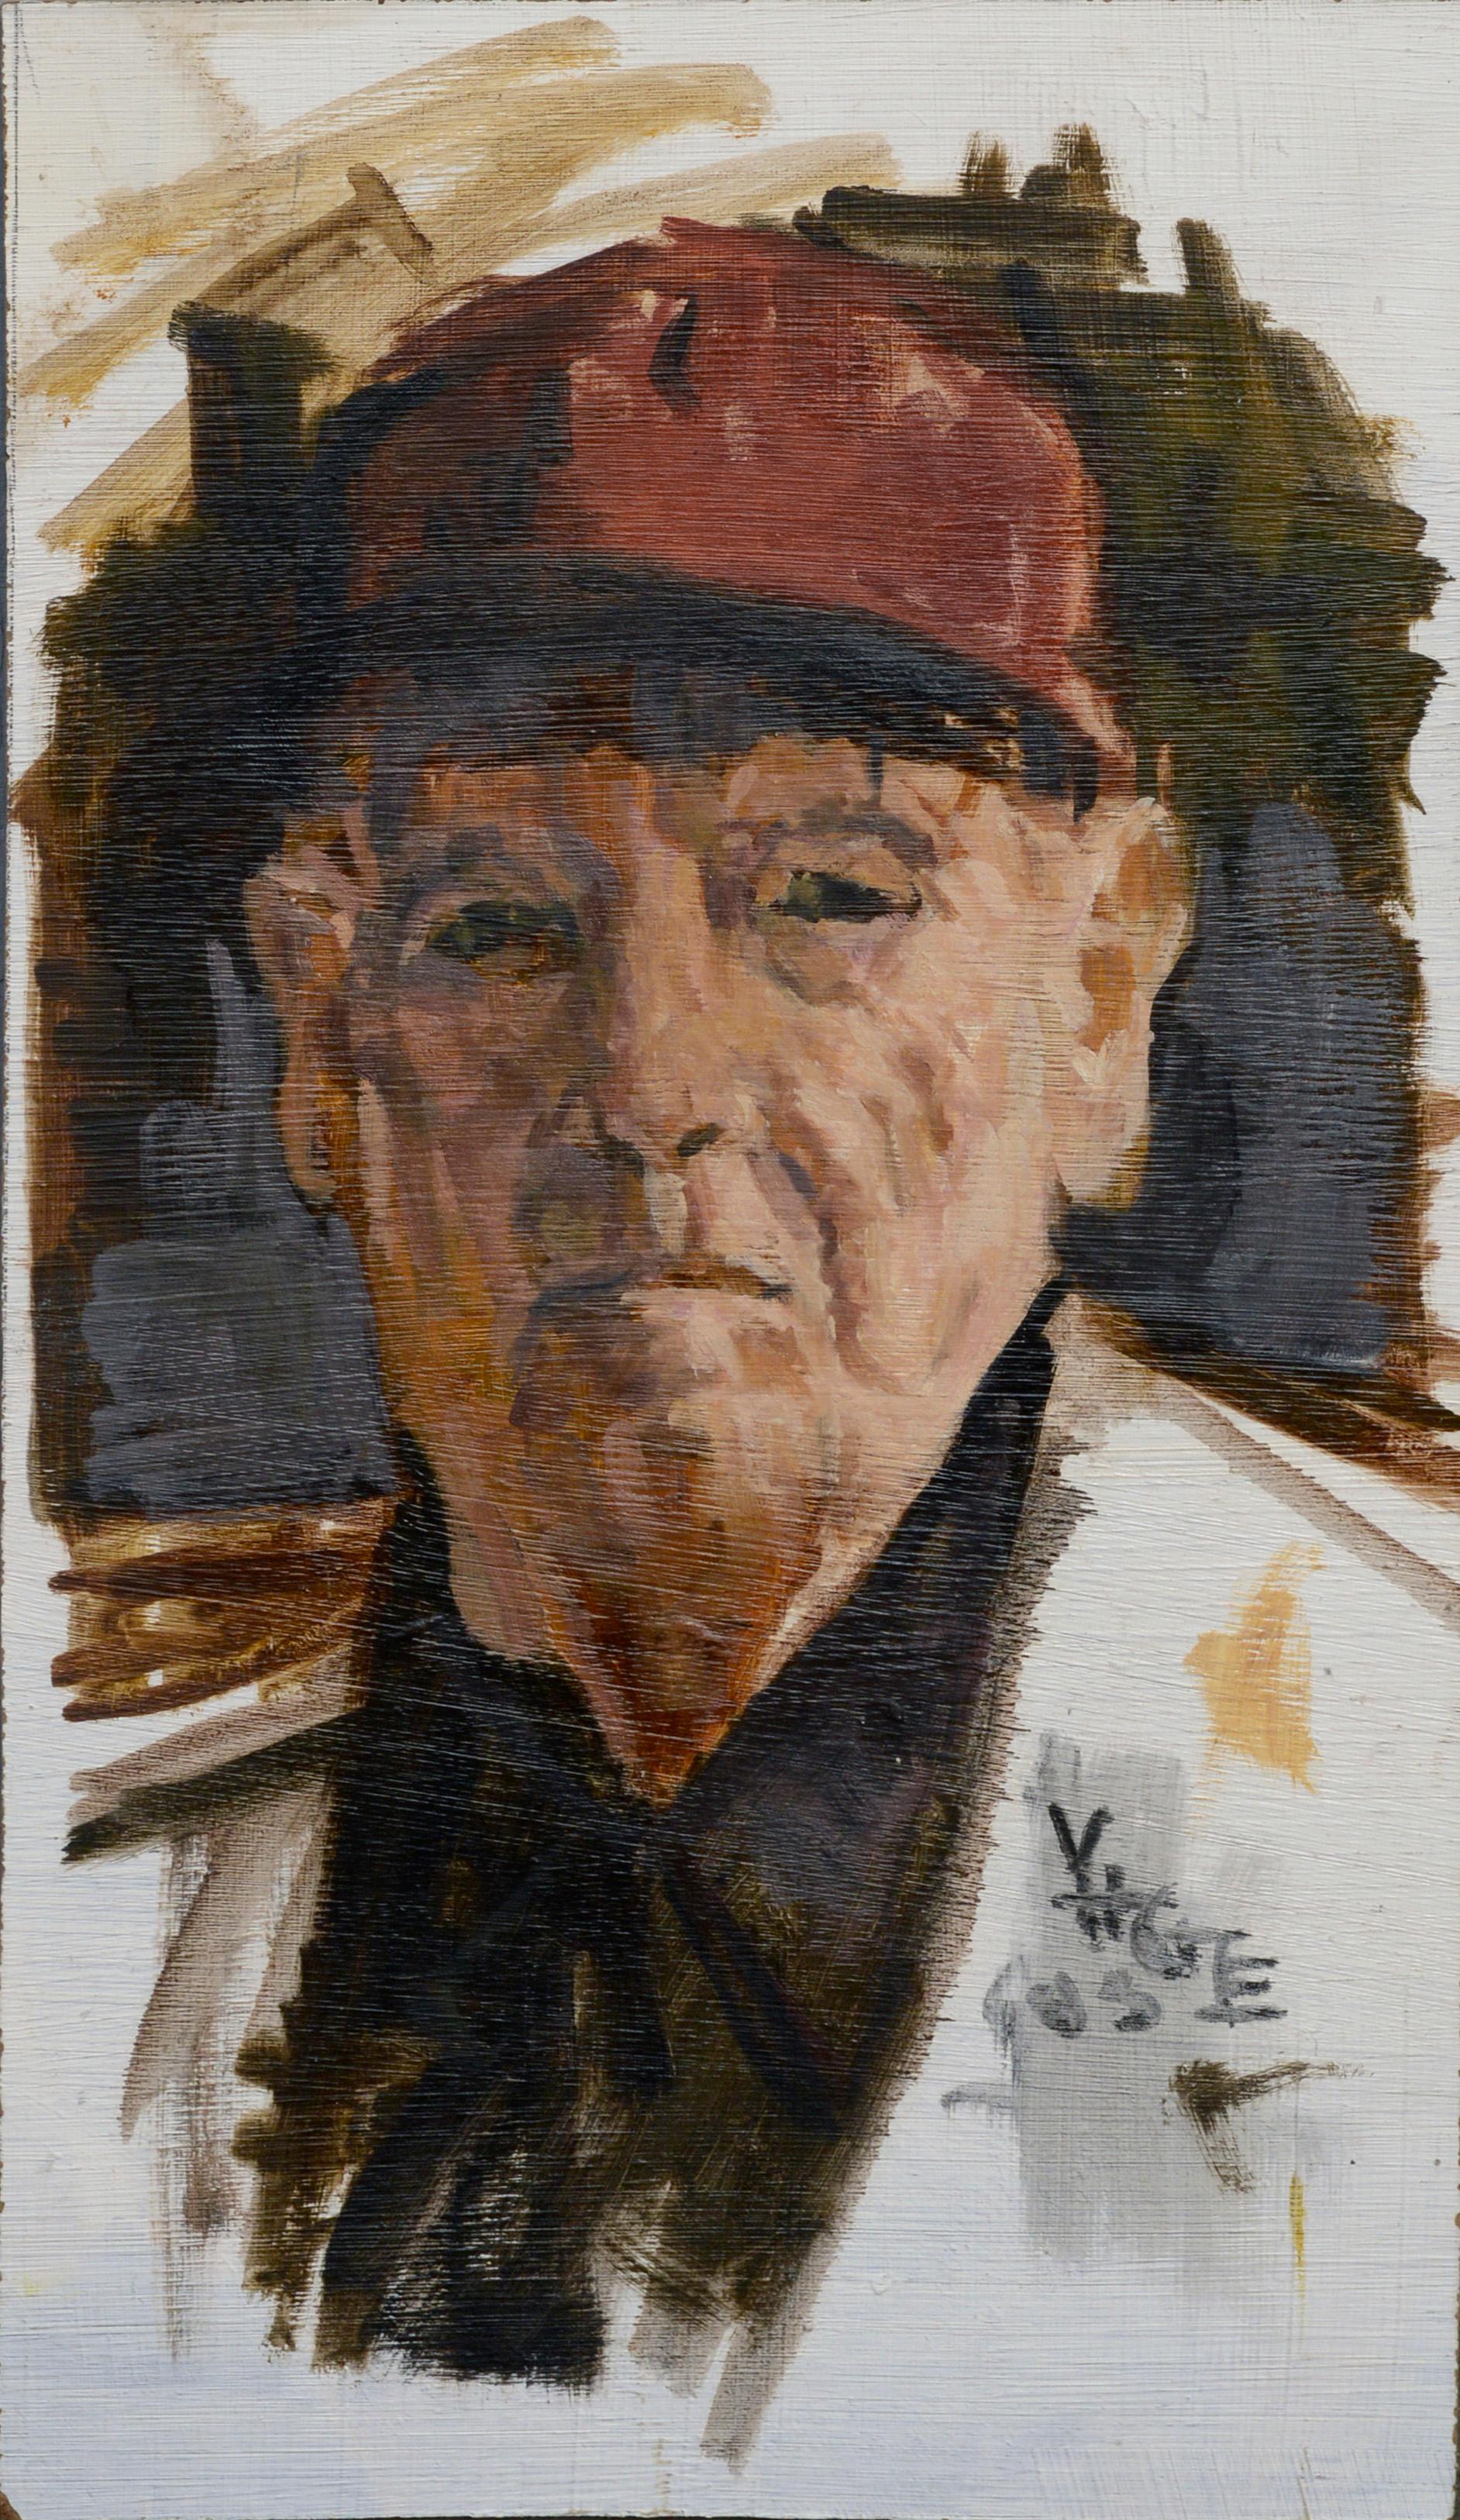 Der Großvater mit Baseballkappe - Porträt